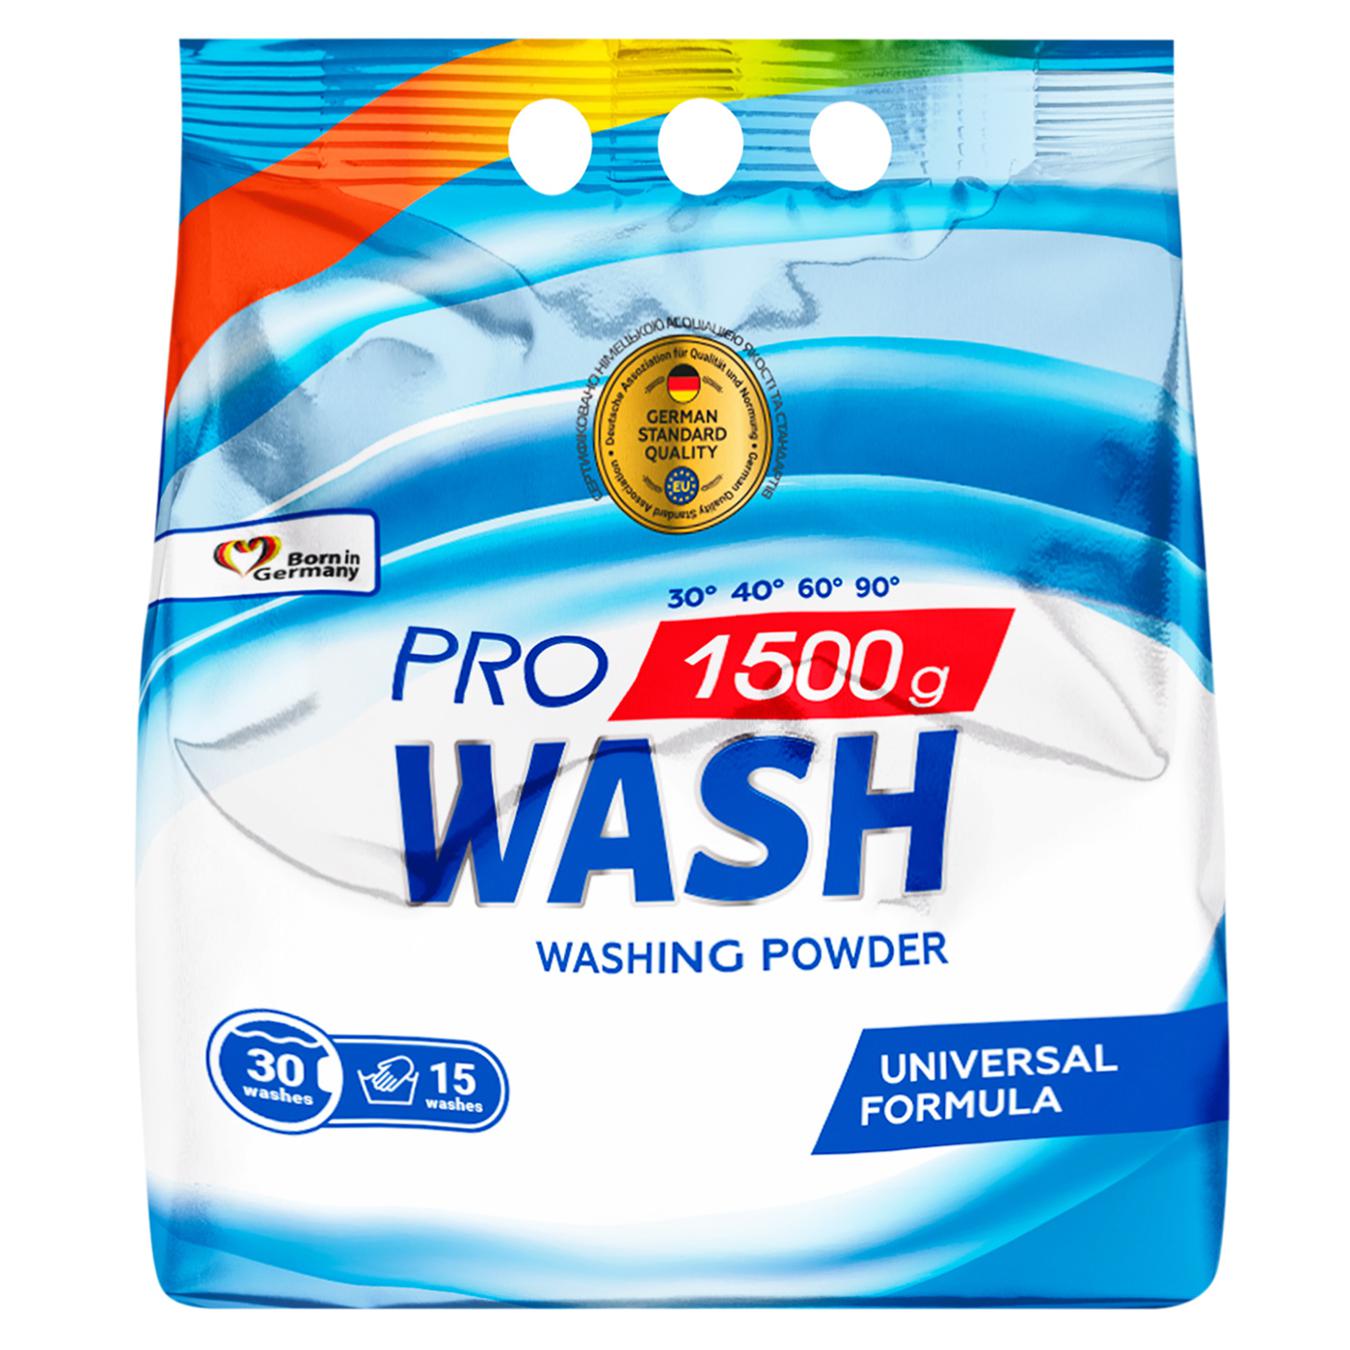 Pro Wash universal washing powder 1.5 kg